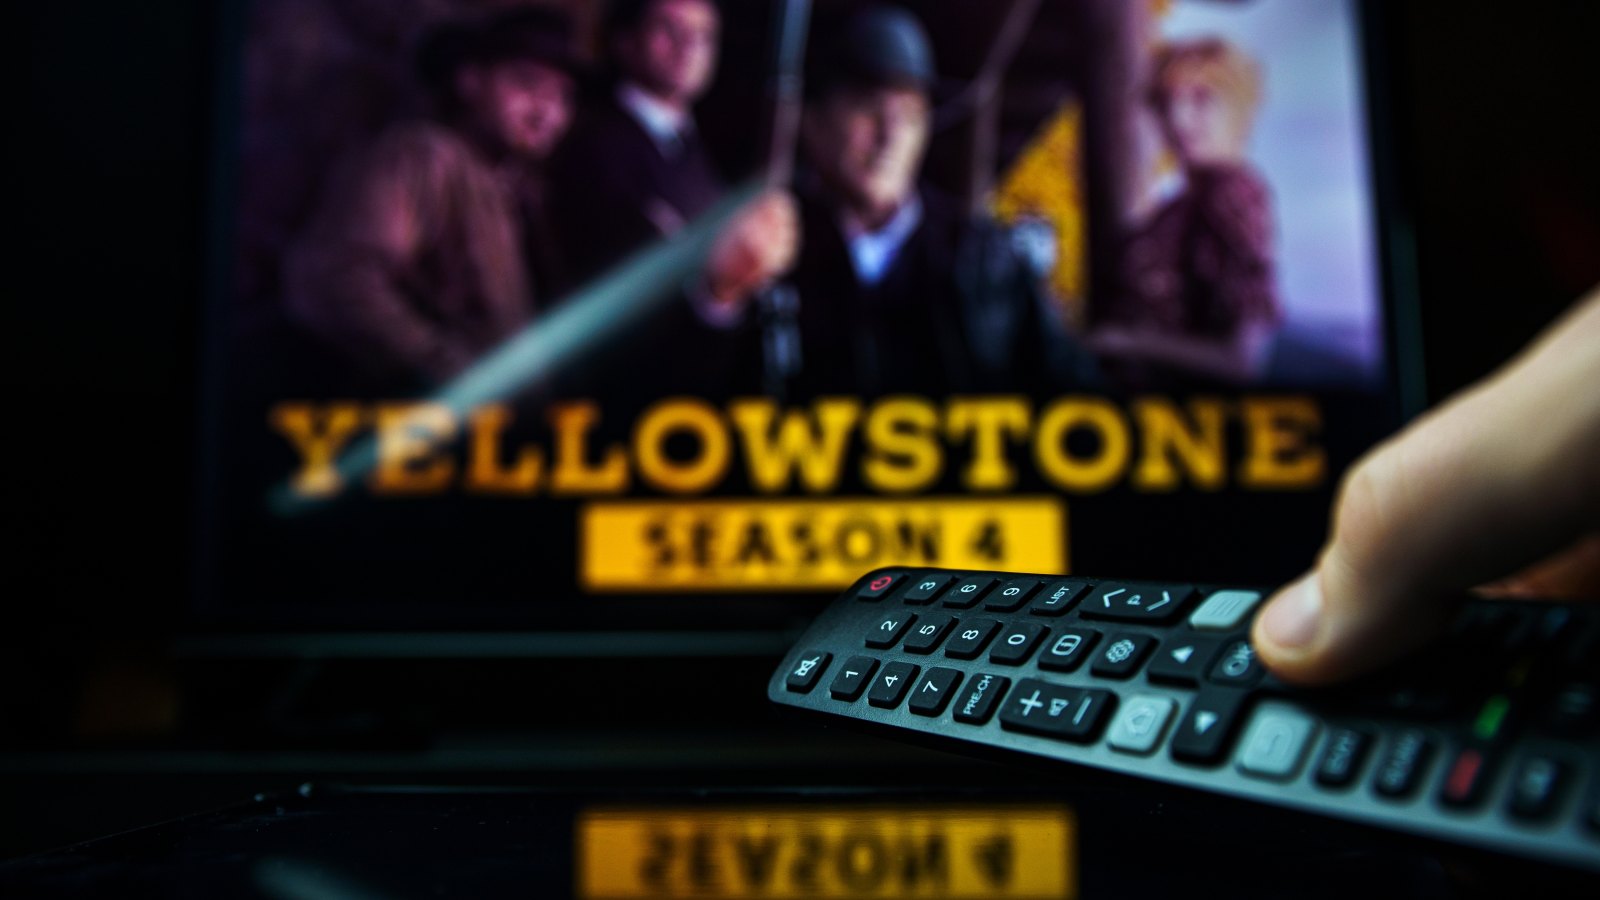 yellowstone-tv-show